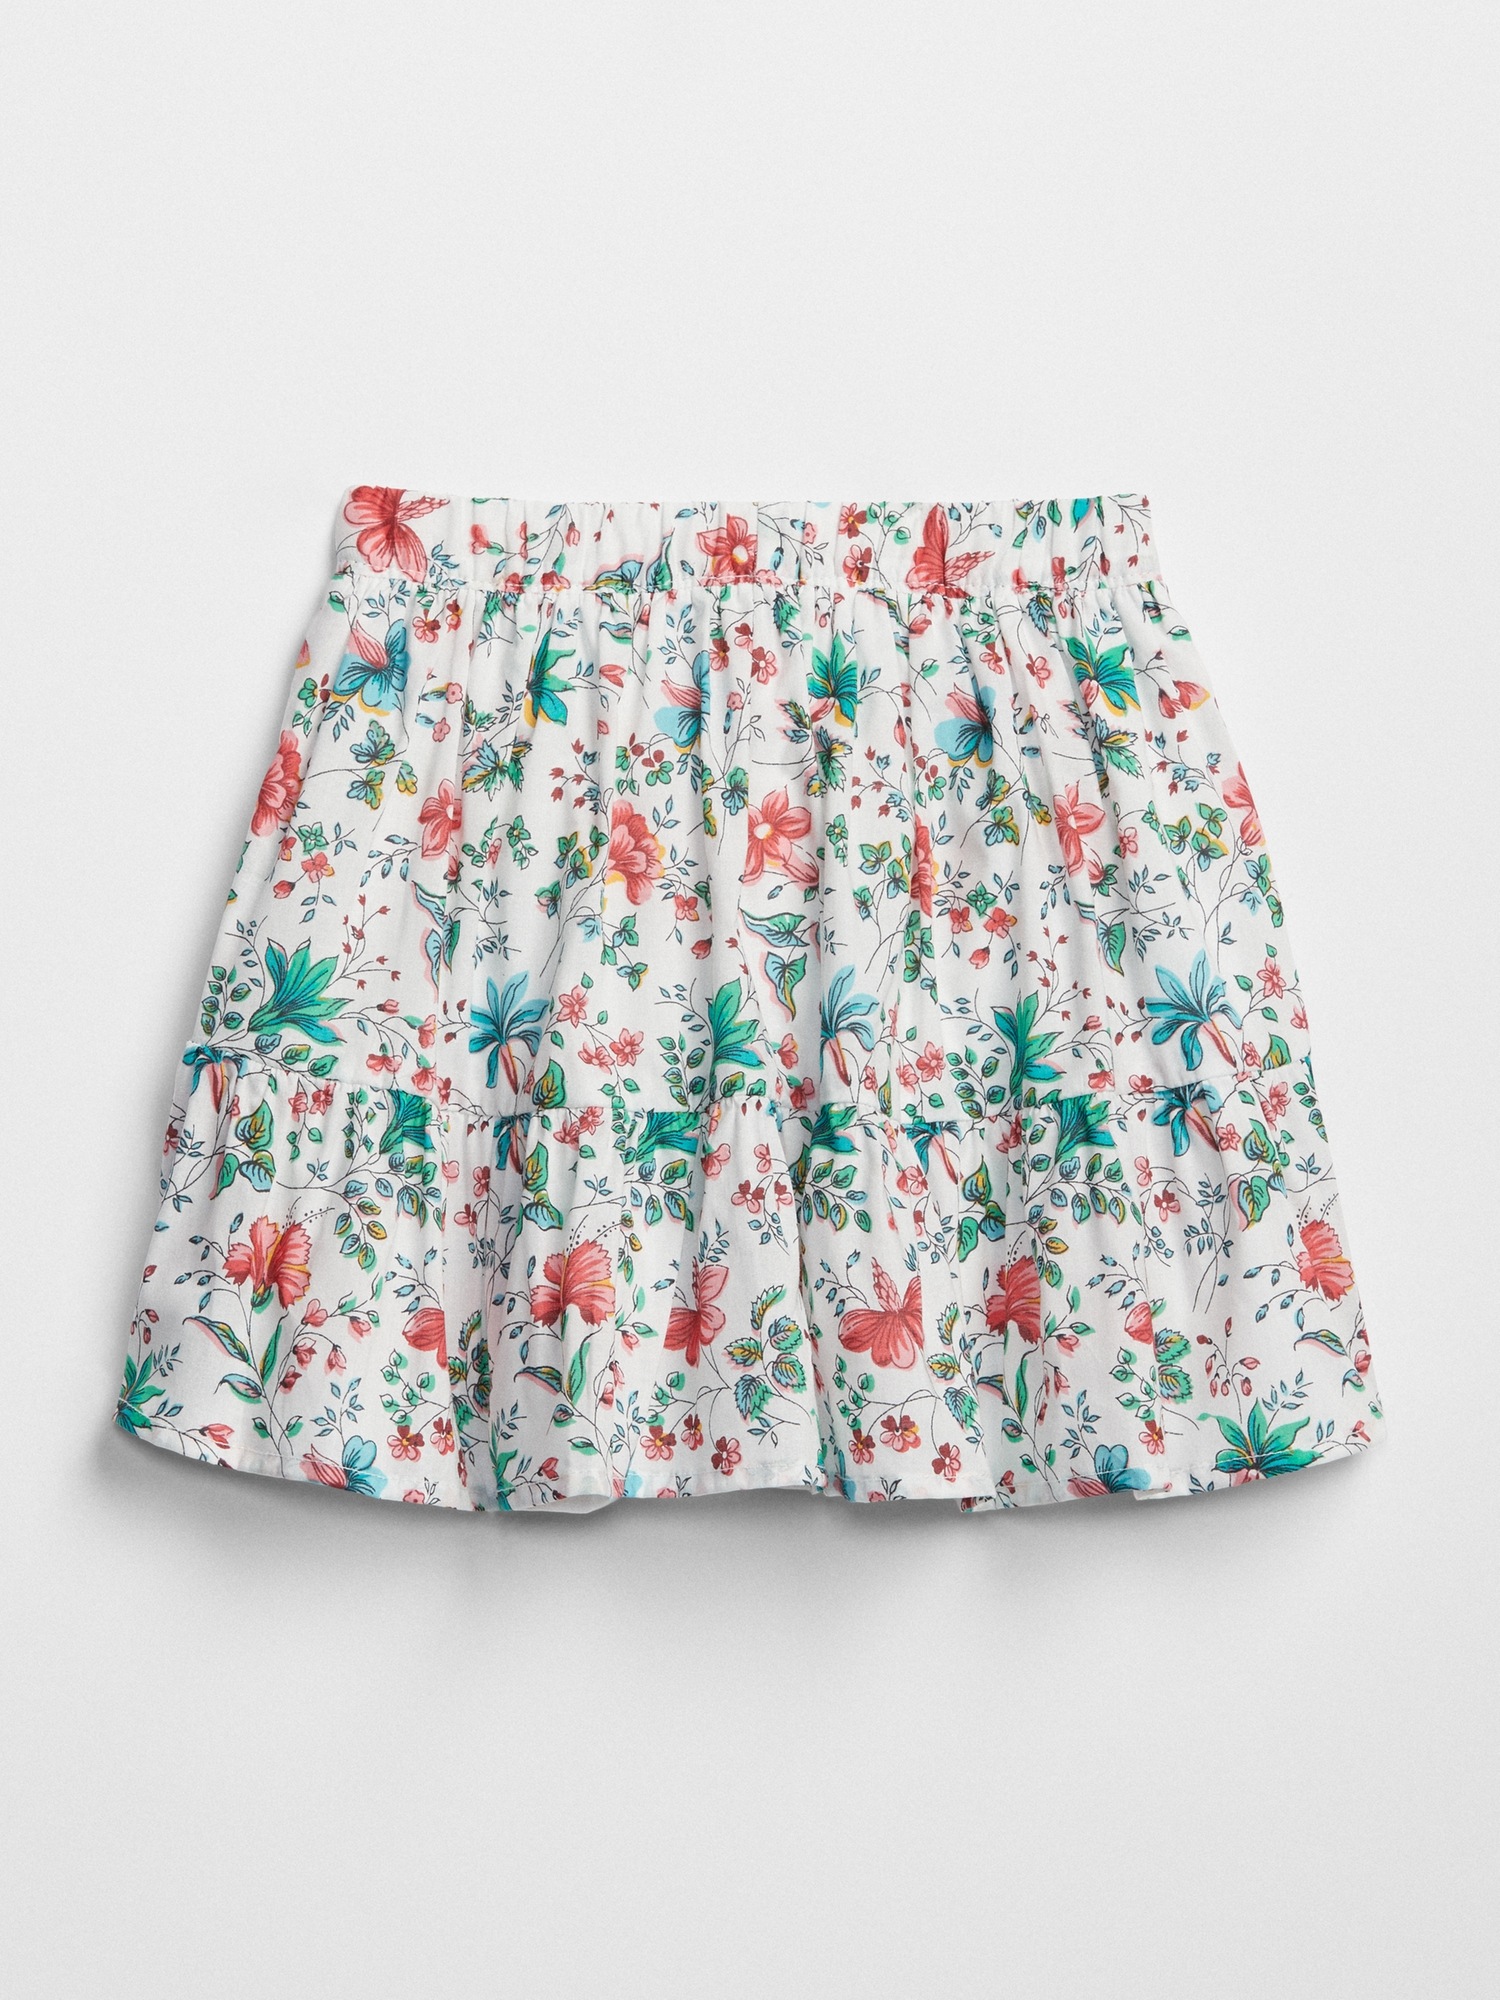 Floral Tier Skirt | Gap